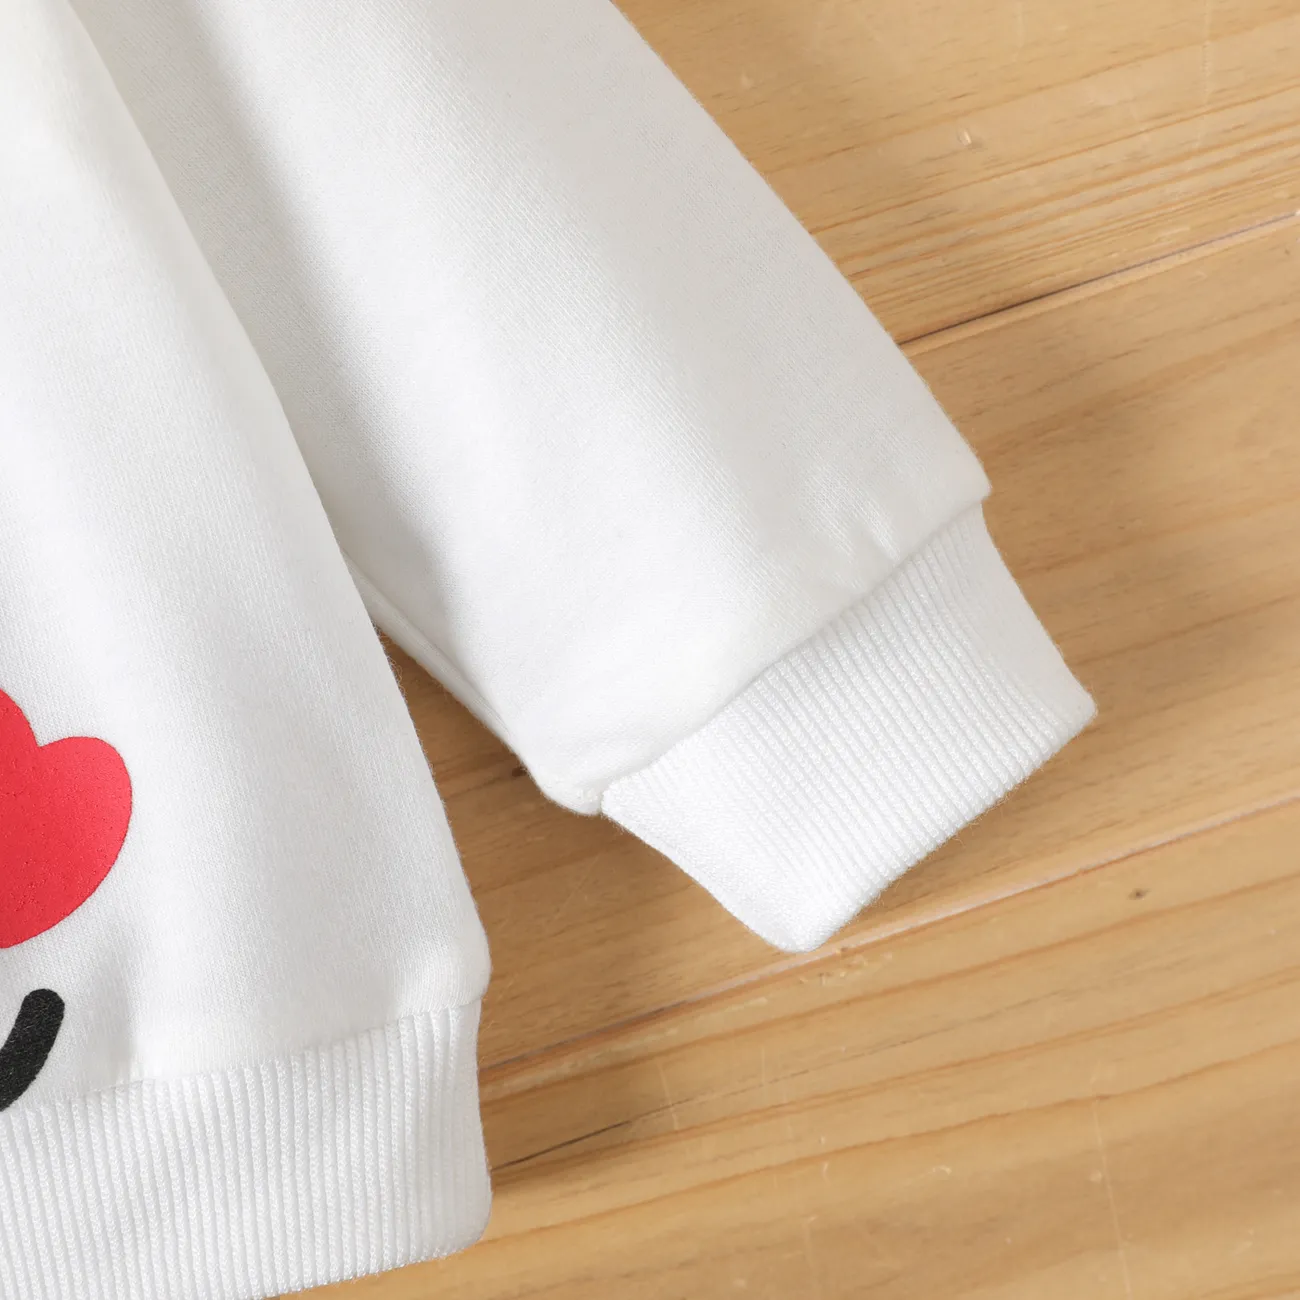 Baby Boy/Girl Heart & Letter Print Long-sleeve Sweatshirt White big image 1